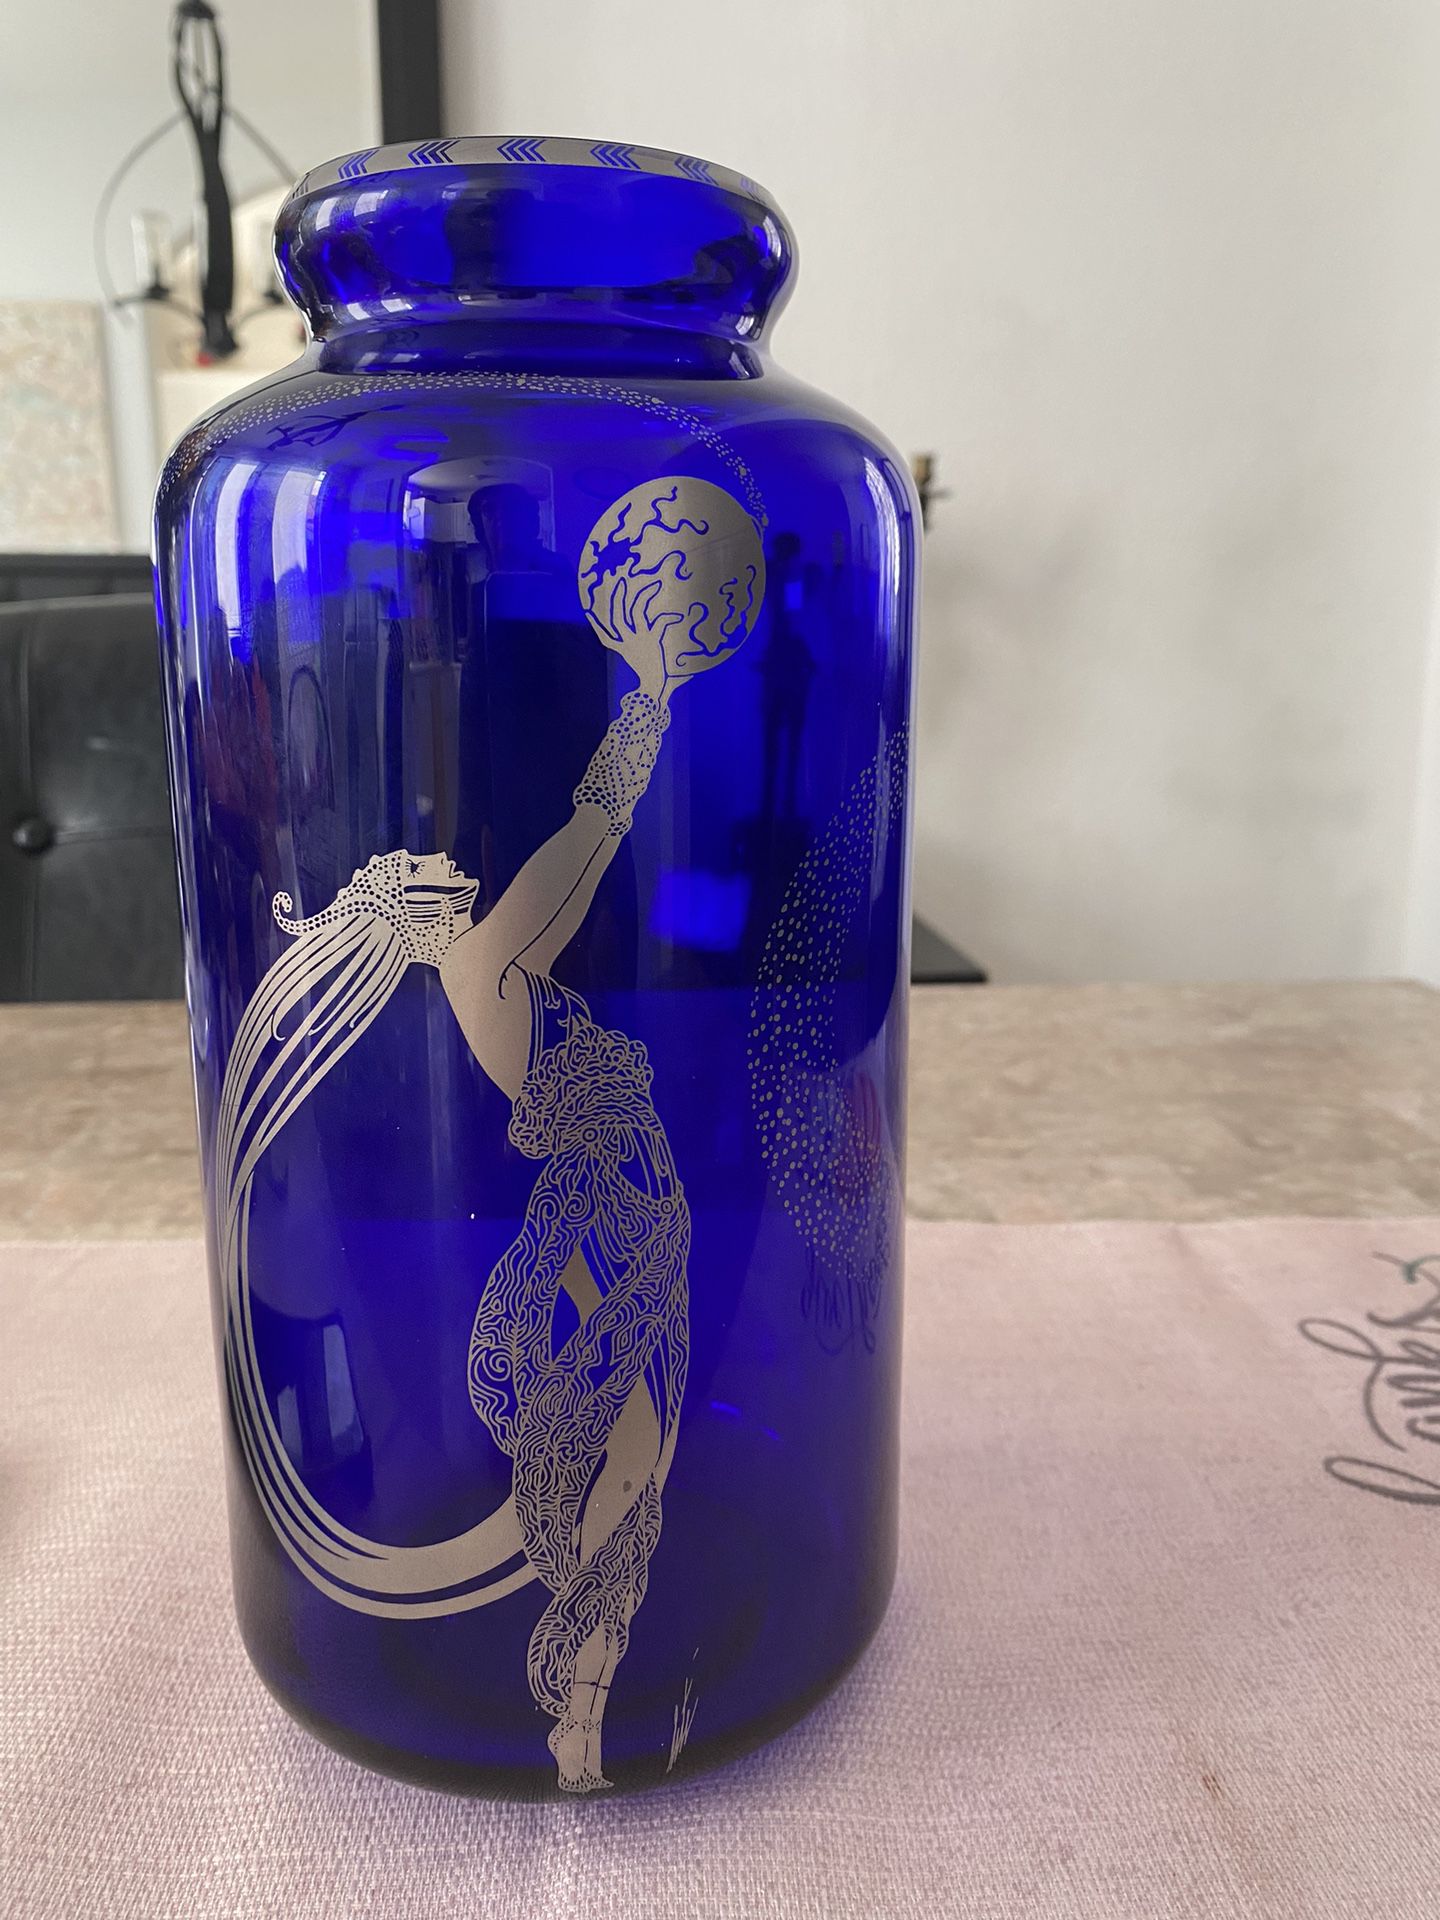 Vintage Erte' "Fireflies" Blue Glass And Silver Metallic Vase By Franklin Mint.